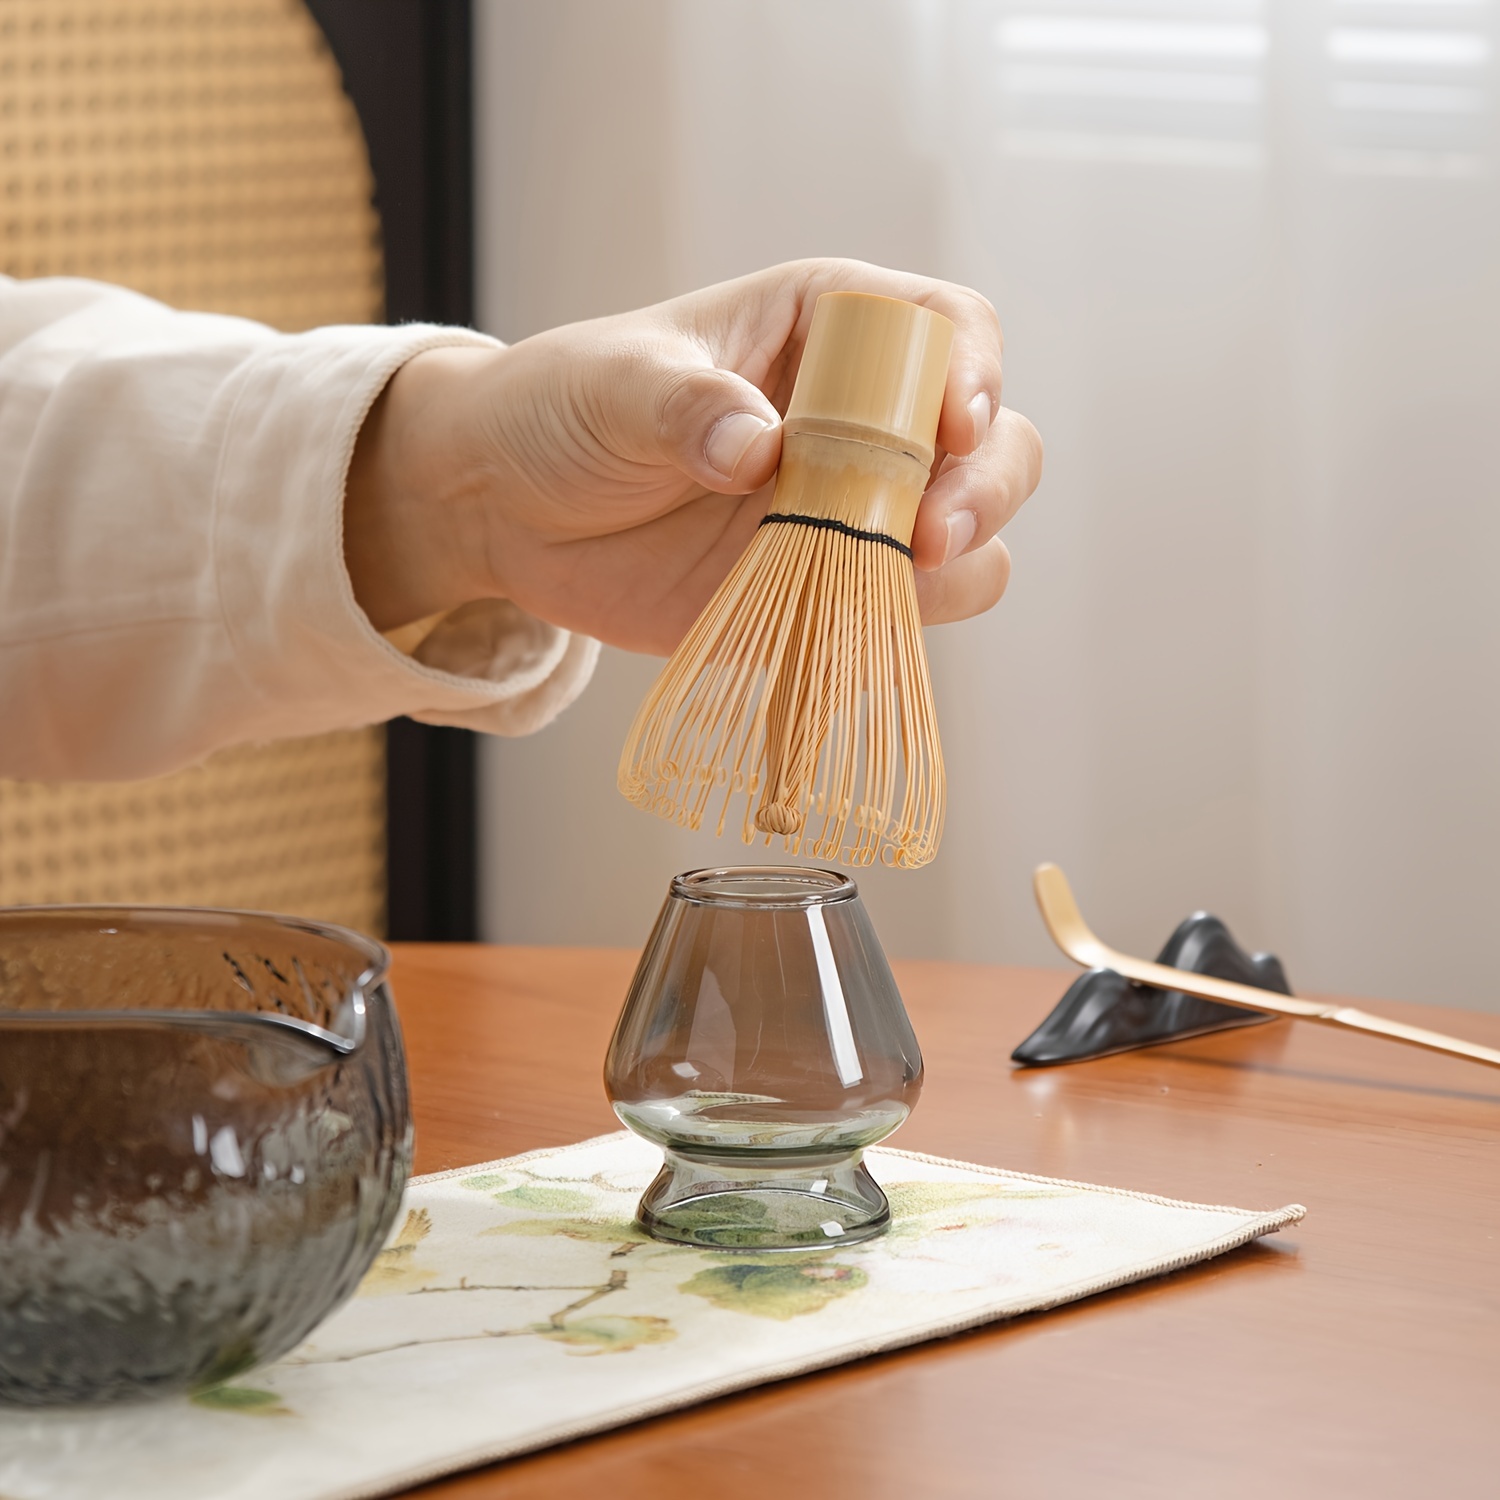  7Pcs Japanese Matcha Tea Set, Matcha Kit with Matcha